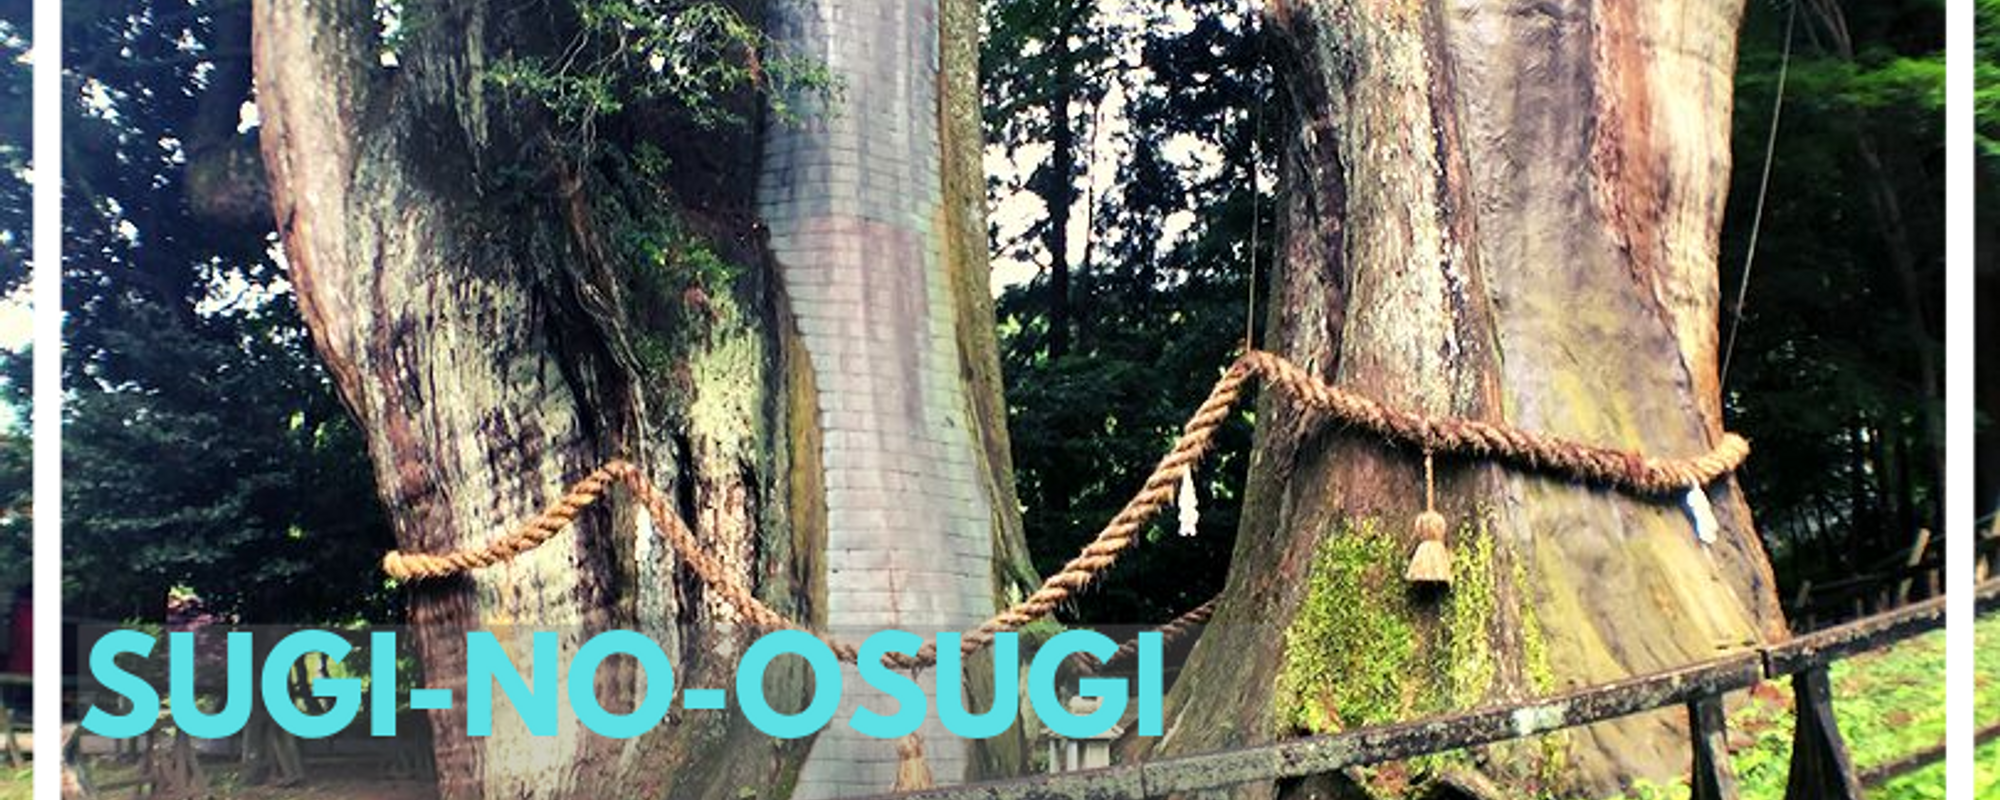 Sugi-no-Osugi The Tallest Cedar Tree in Japan, Kochi